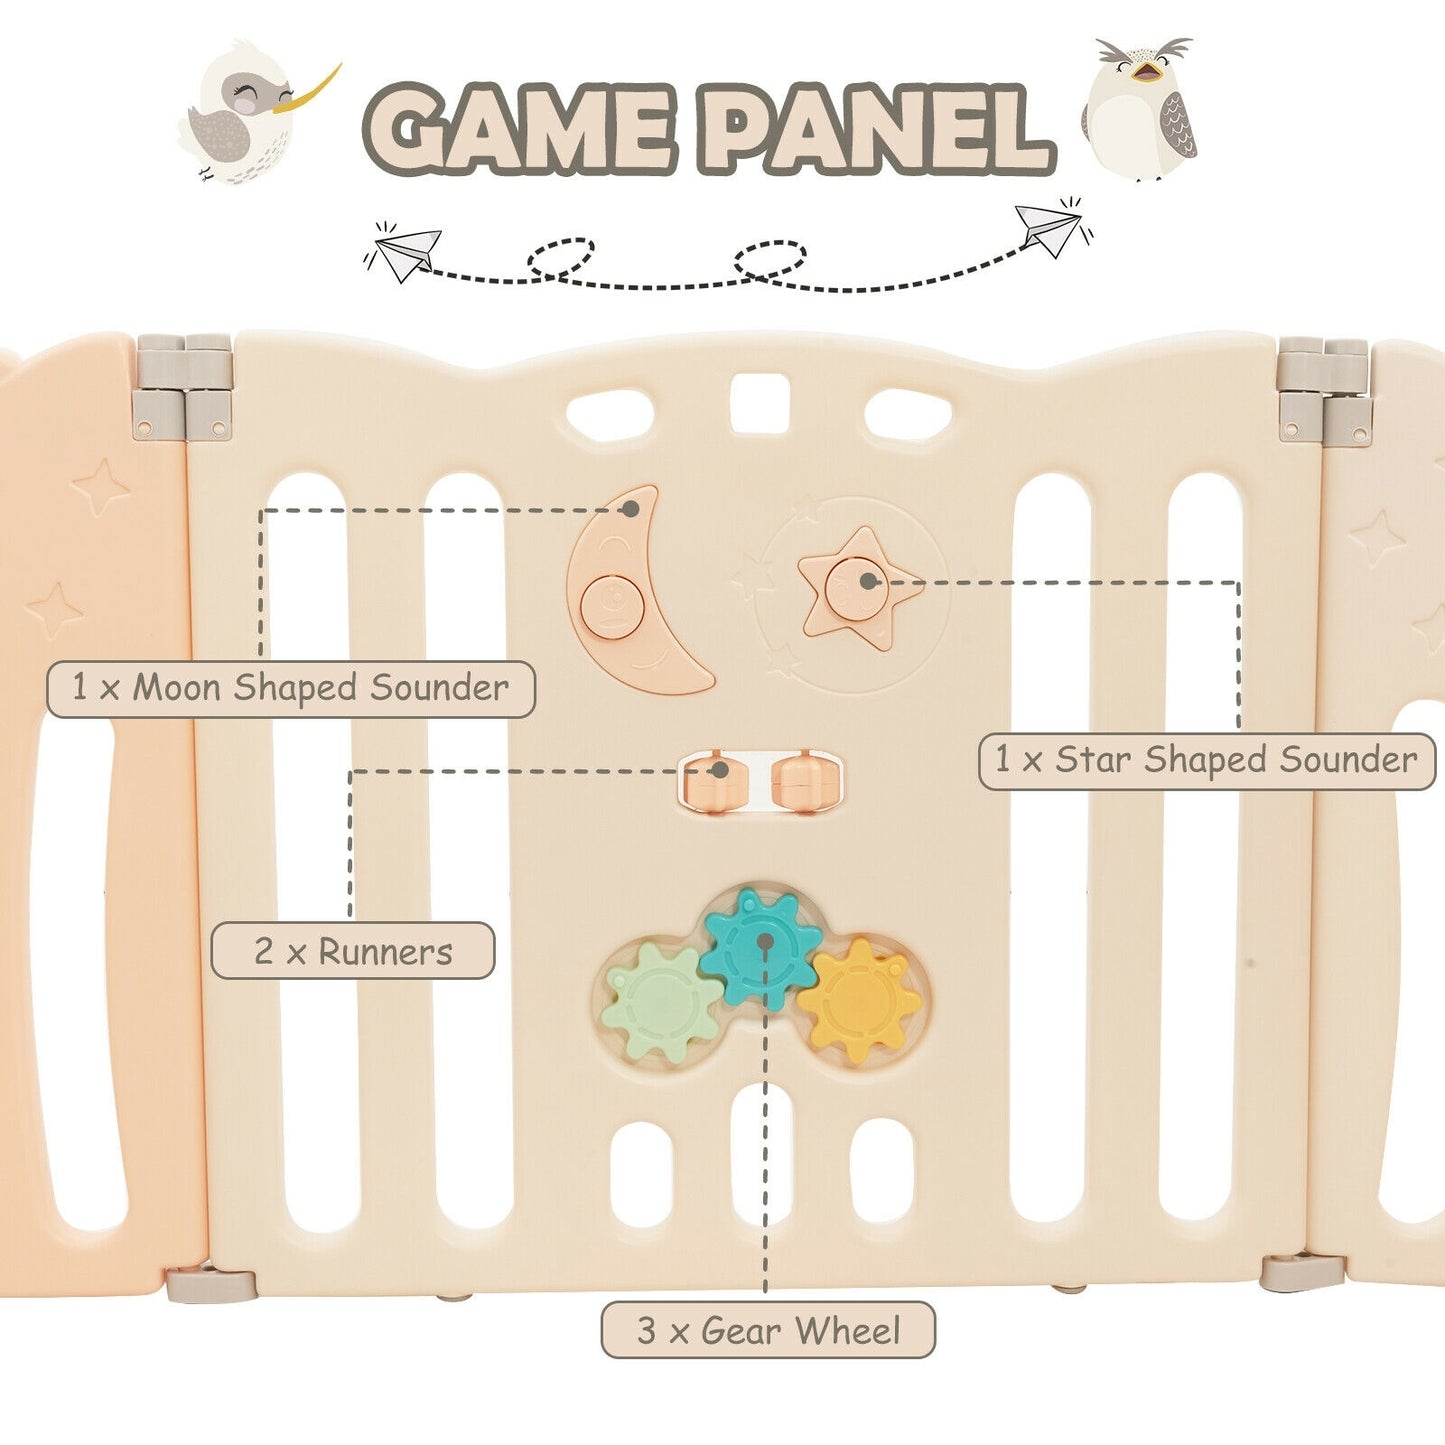 14-Panel Baby Playpen Kids Activity Center Foldable Play Yard with Lock Door-Pink